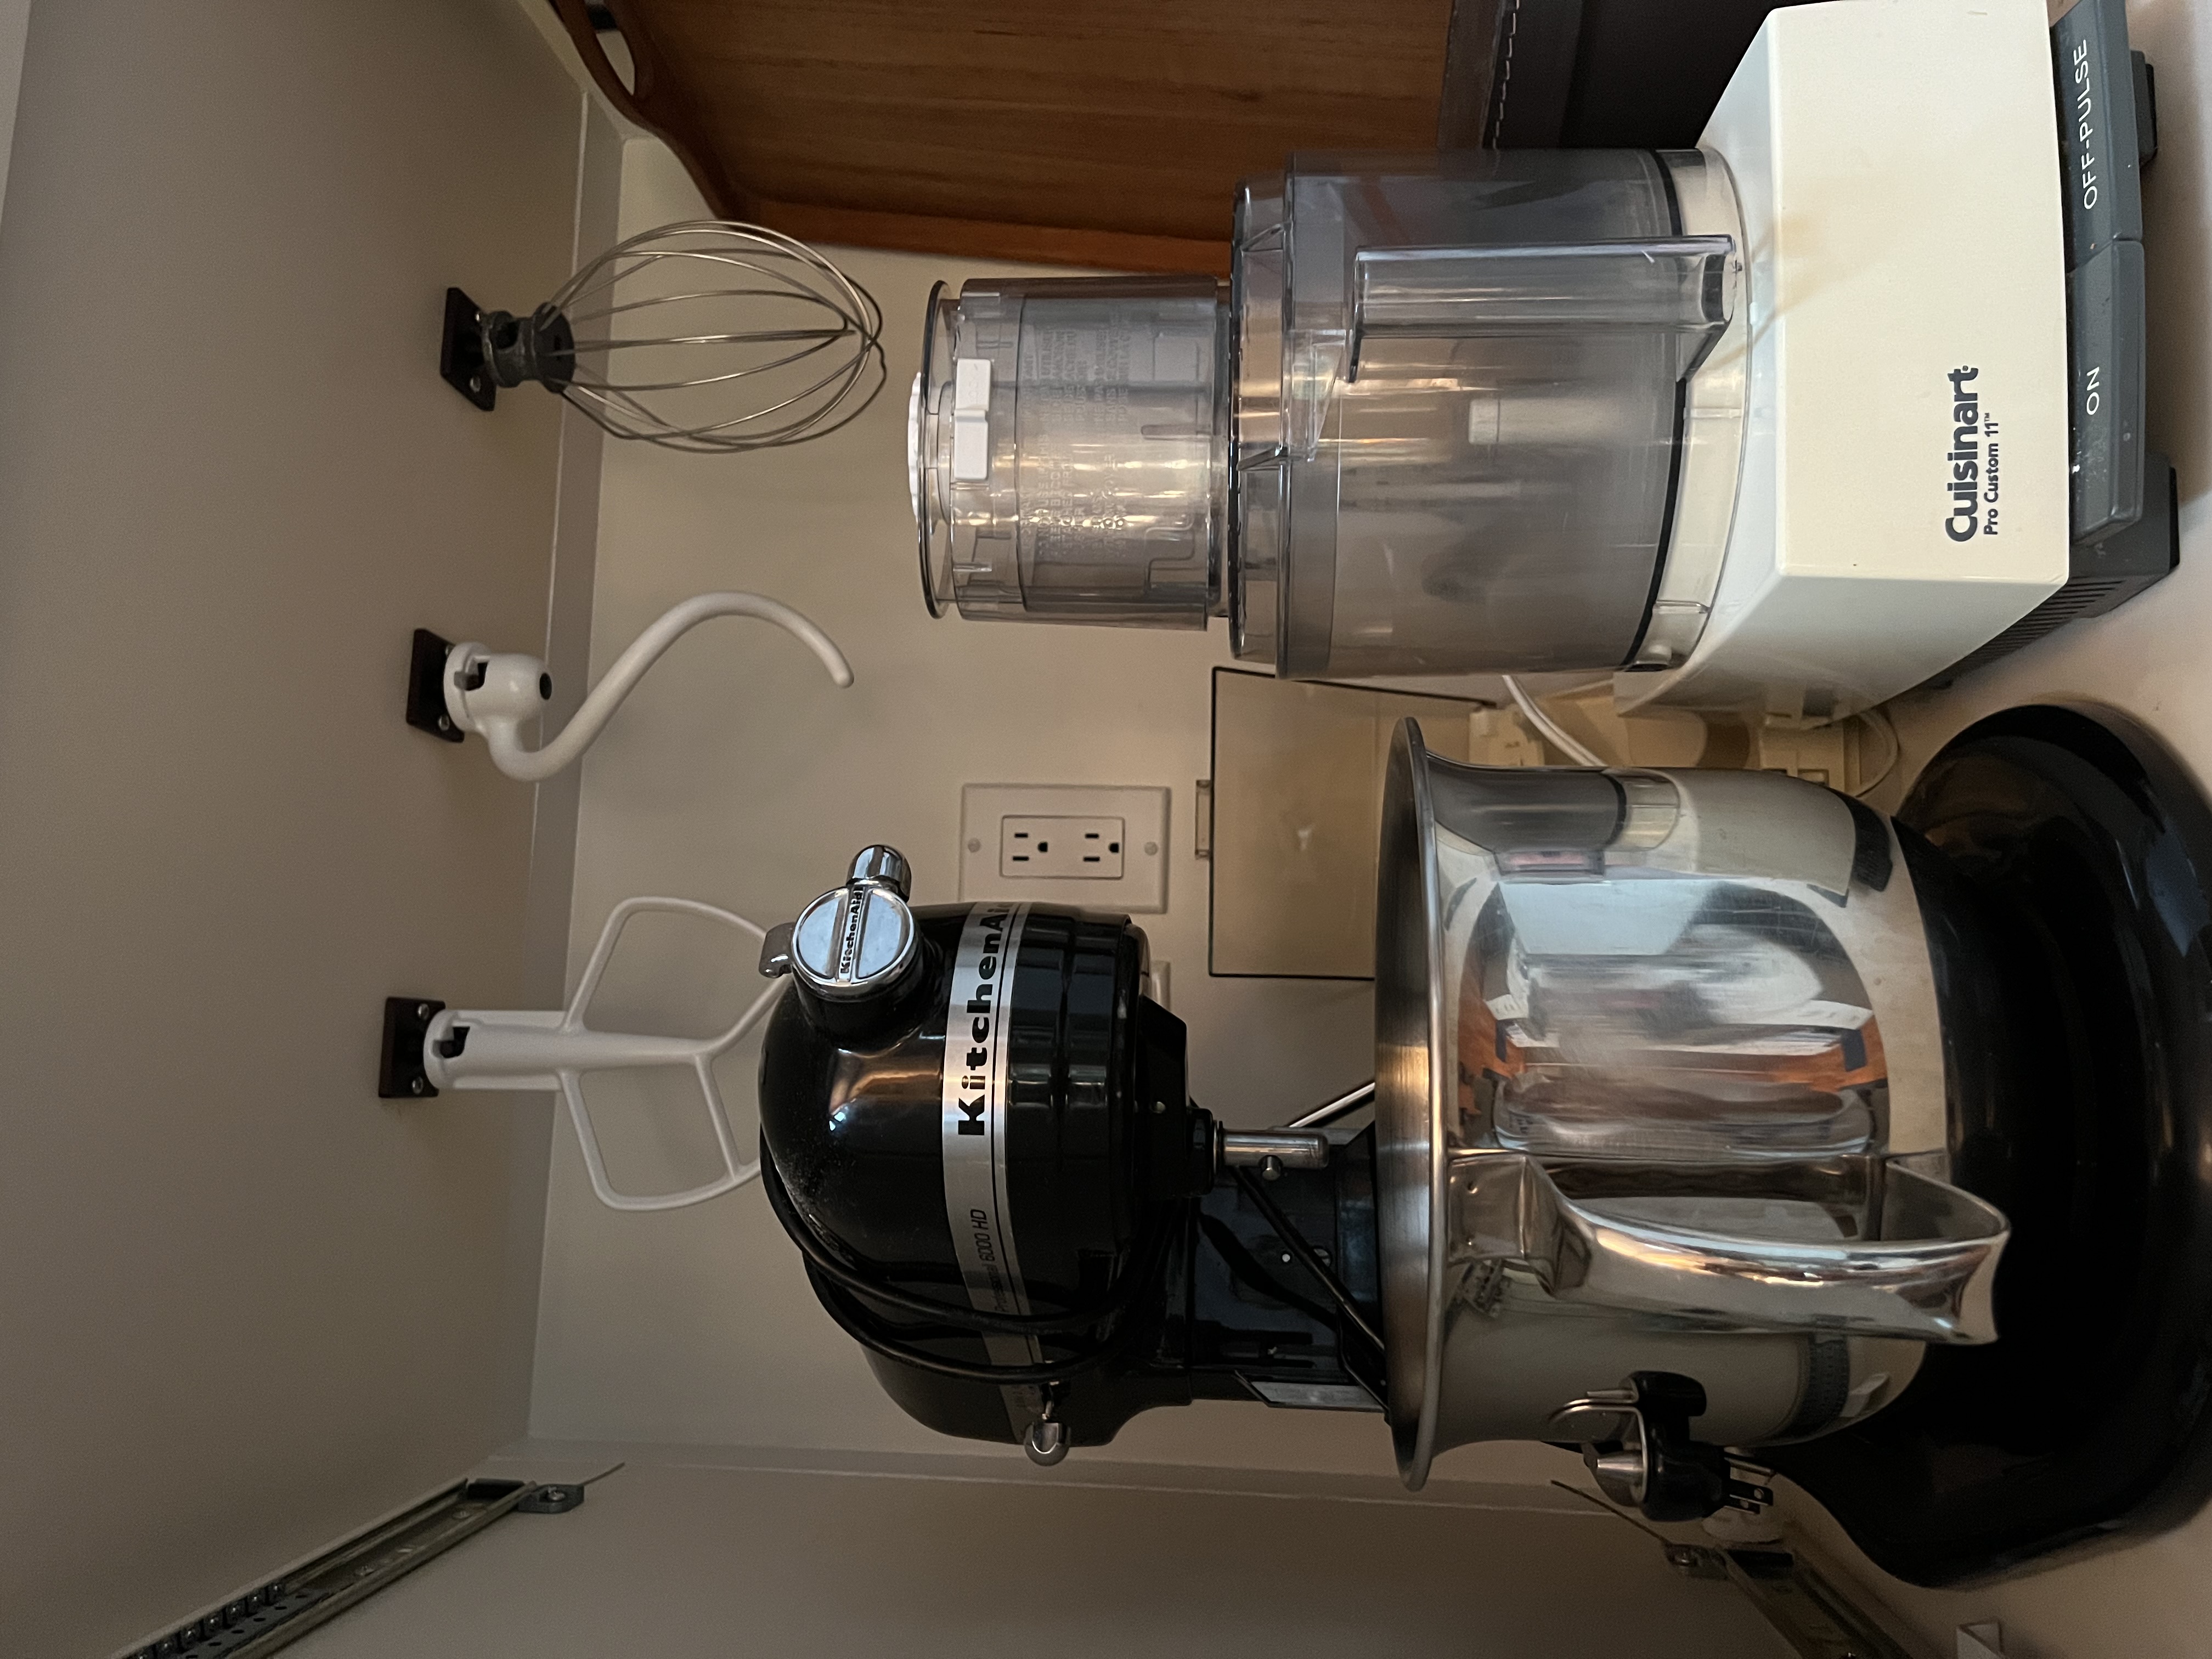 KitchenAid Mixer Accessory Attachment Holder by frez_knee